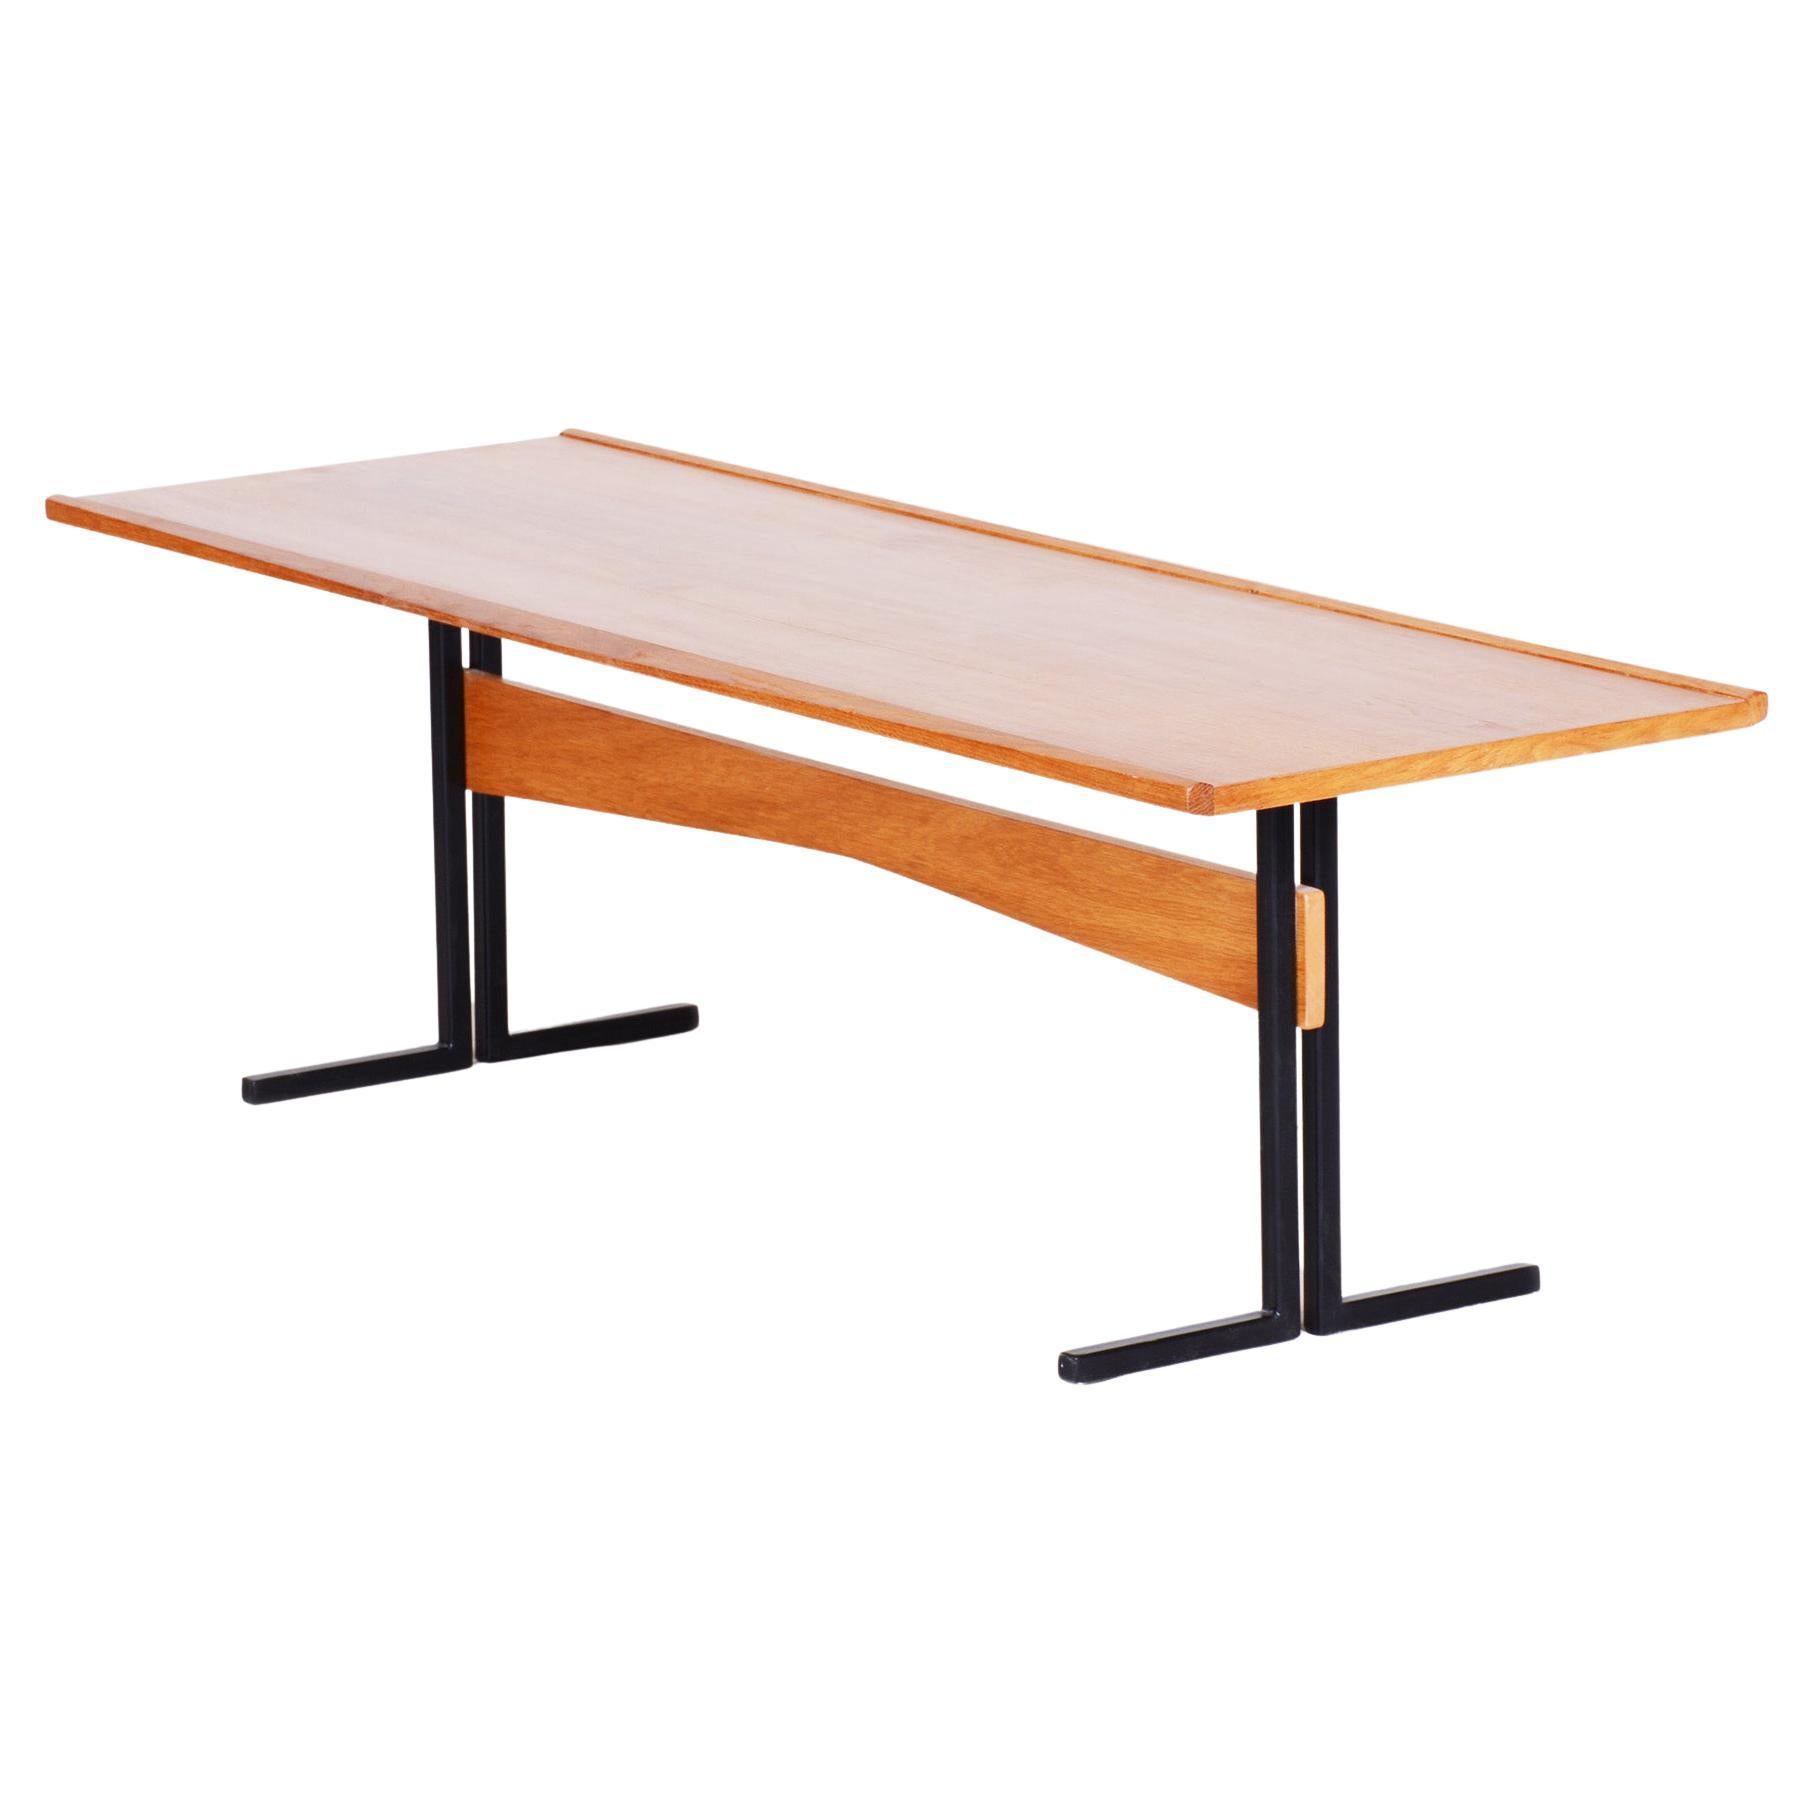 Original Rectangular Ash and Steel Table, Czech Mid-Century Modern, 1960s For Sale